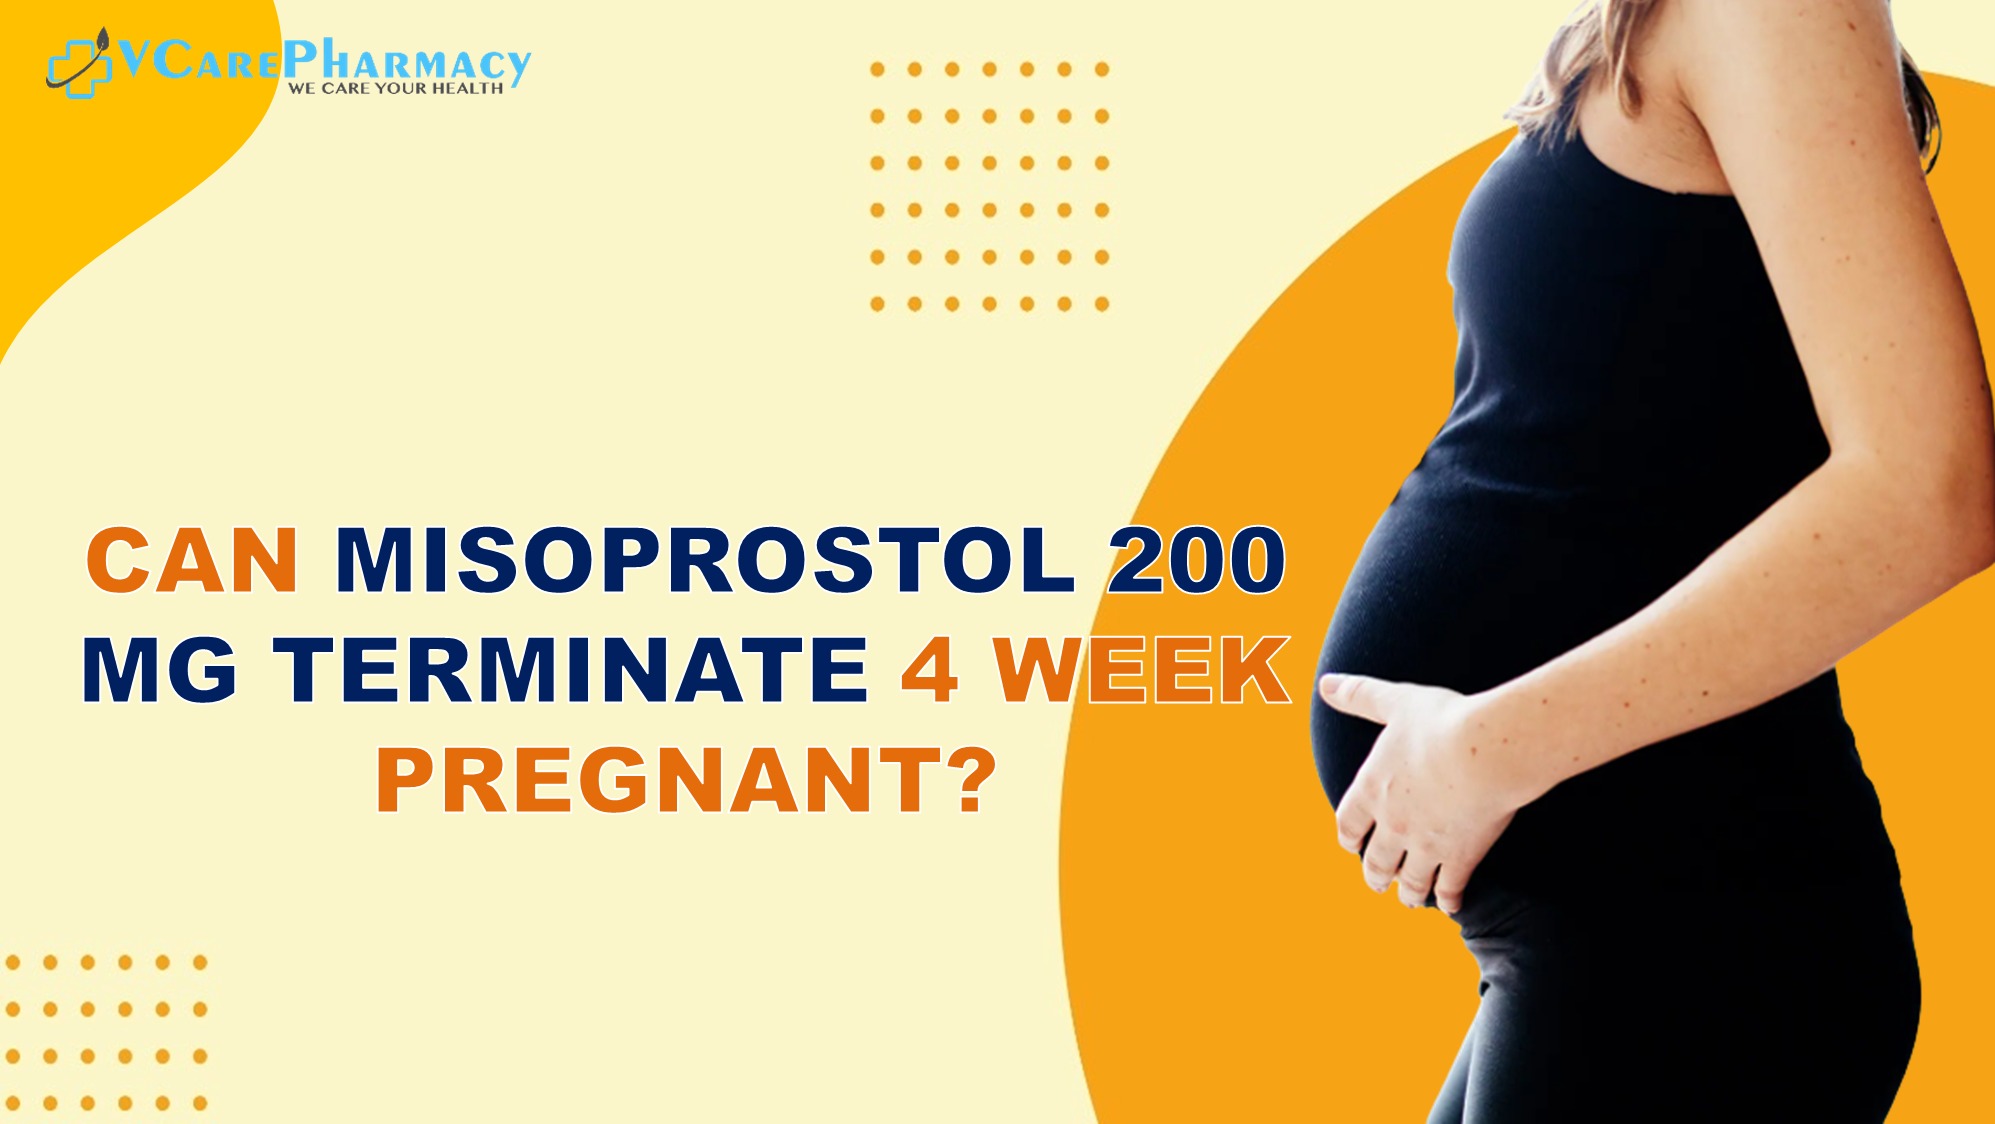 Can misoprostol 200mg terminate 4 weeks of pregnancy?